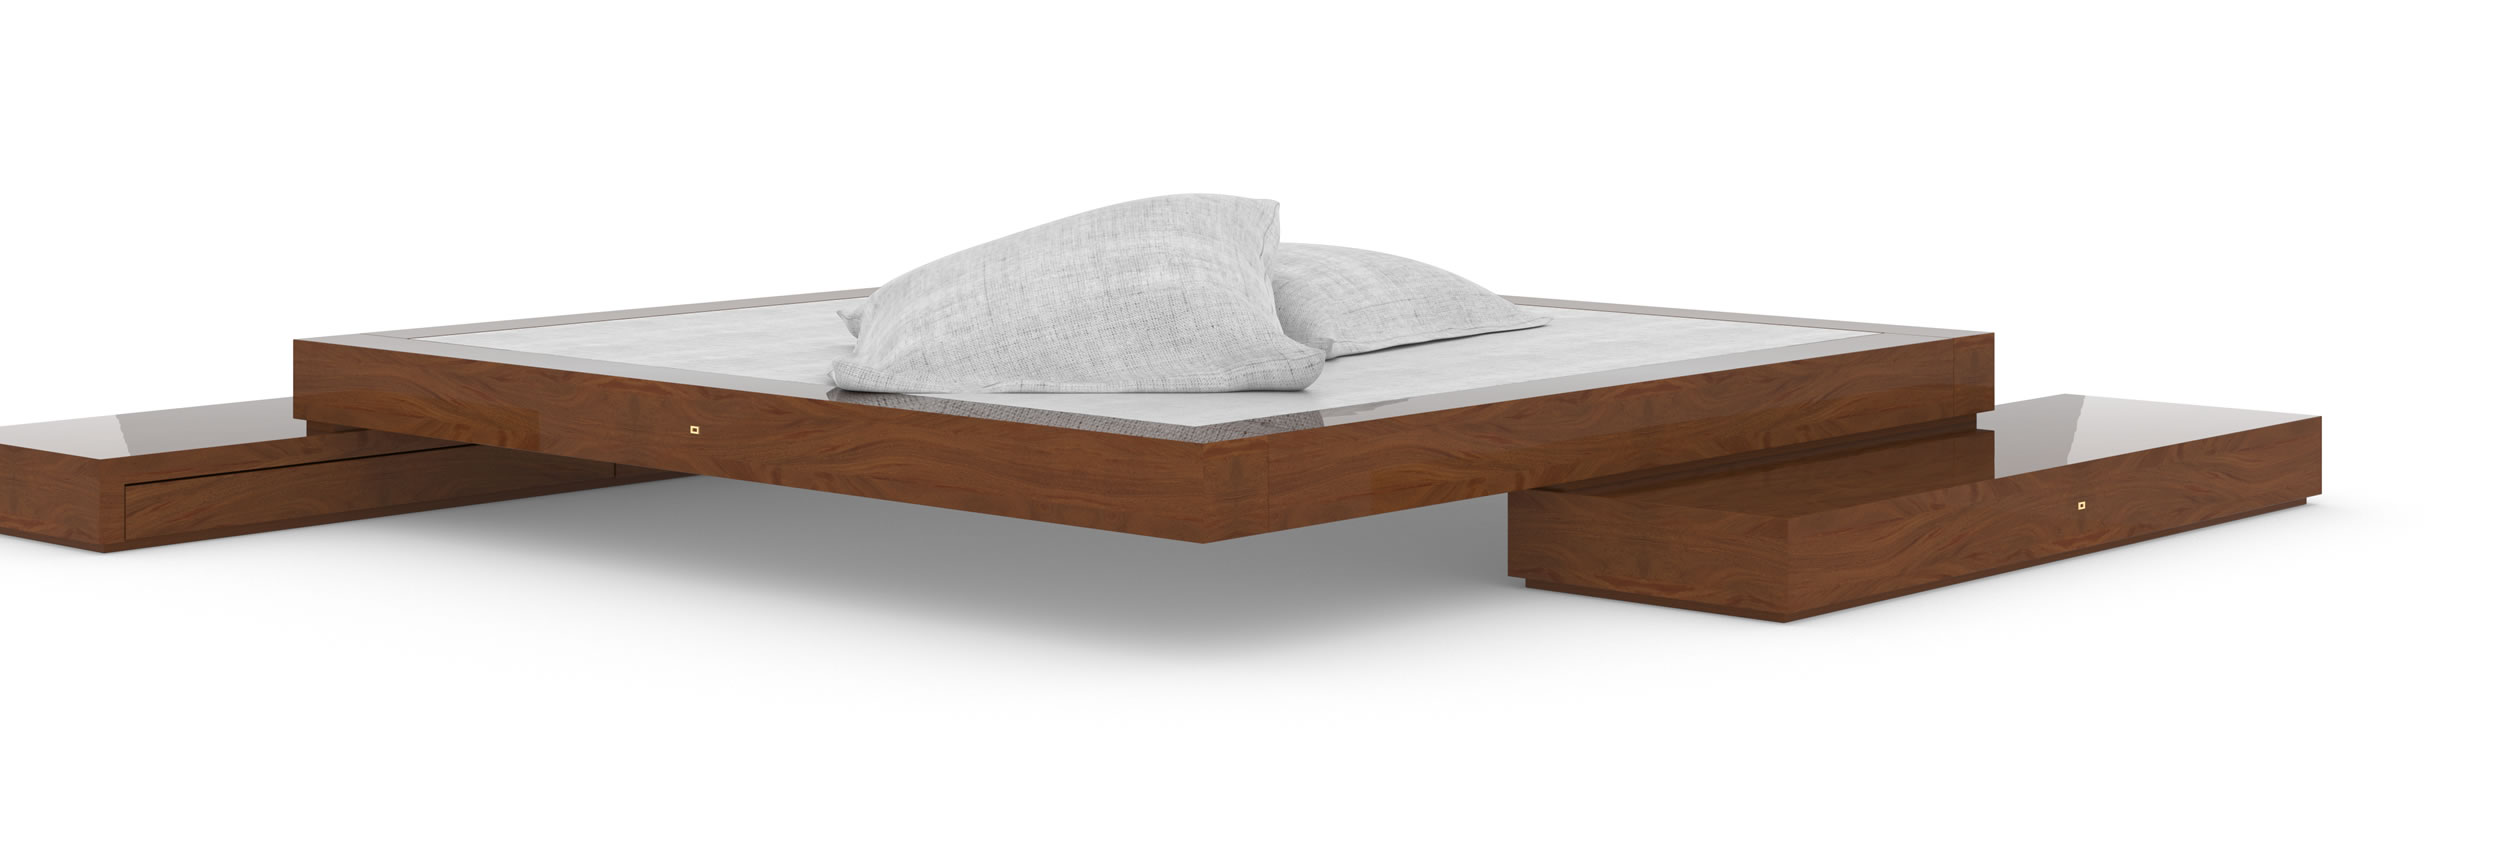 Design Bett Sideboards Raffiniert Mahagoni Edelholz Massgefertigt Elegant Design InteriorFELIX SCHWAKE